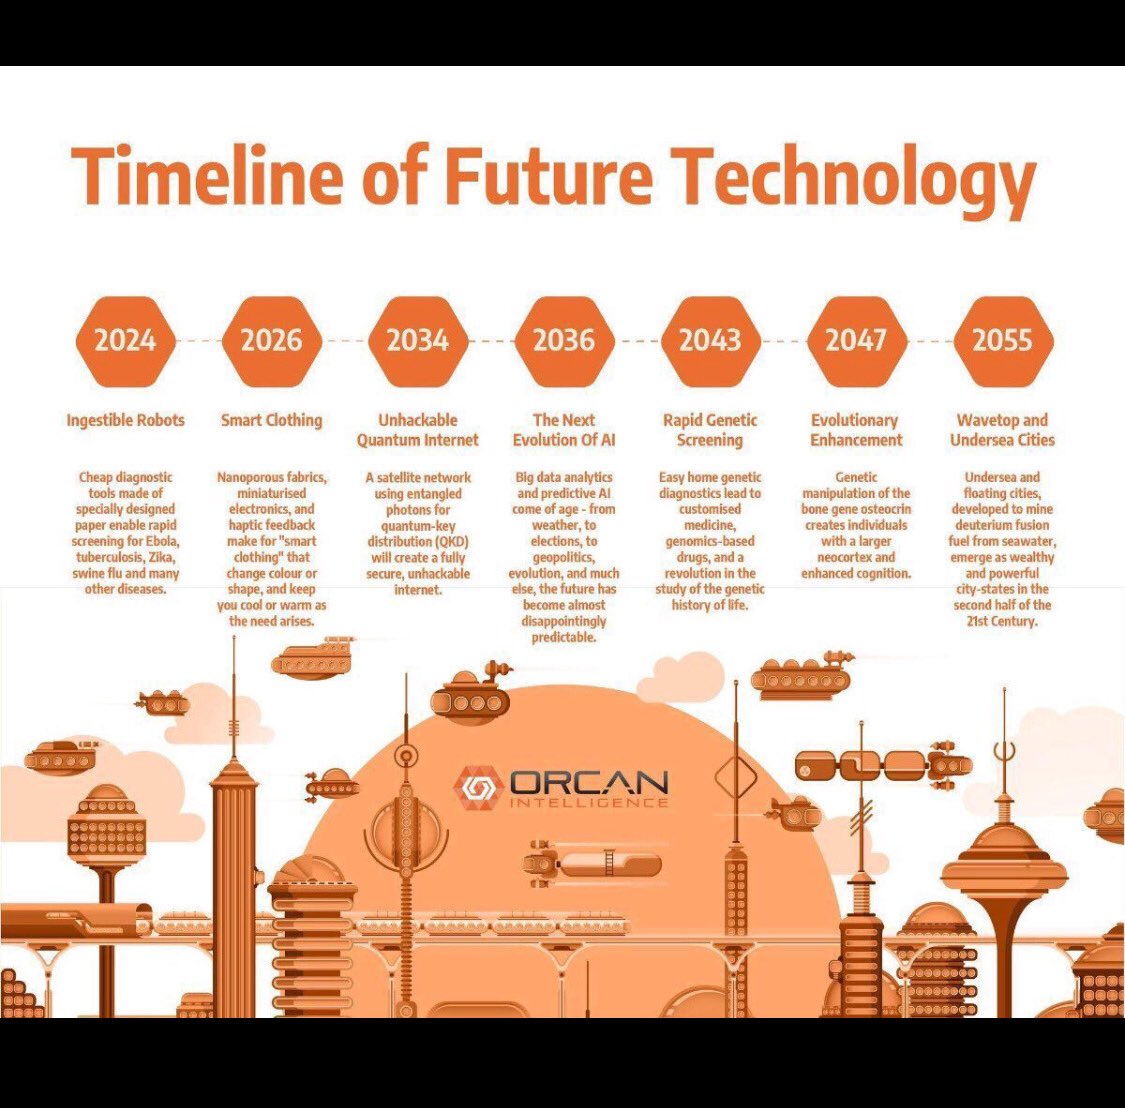 Timeline of Future #Technology fantastic #infographic 
#data #AI #smartcity states #smartclothing #quantum #internet #data #prediction #nano #healthcare micro #robots @thomaspower @zeeshanmallick @intelligenthq @ztudium @hedgethink